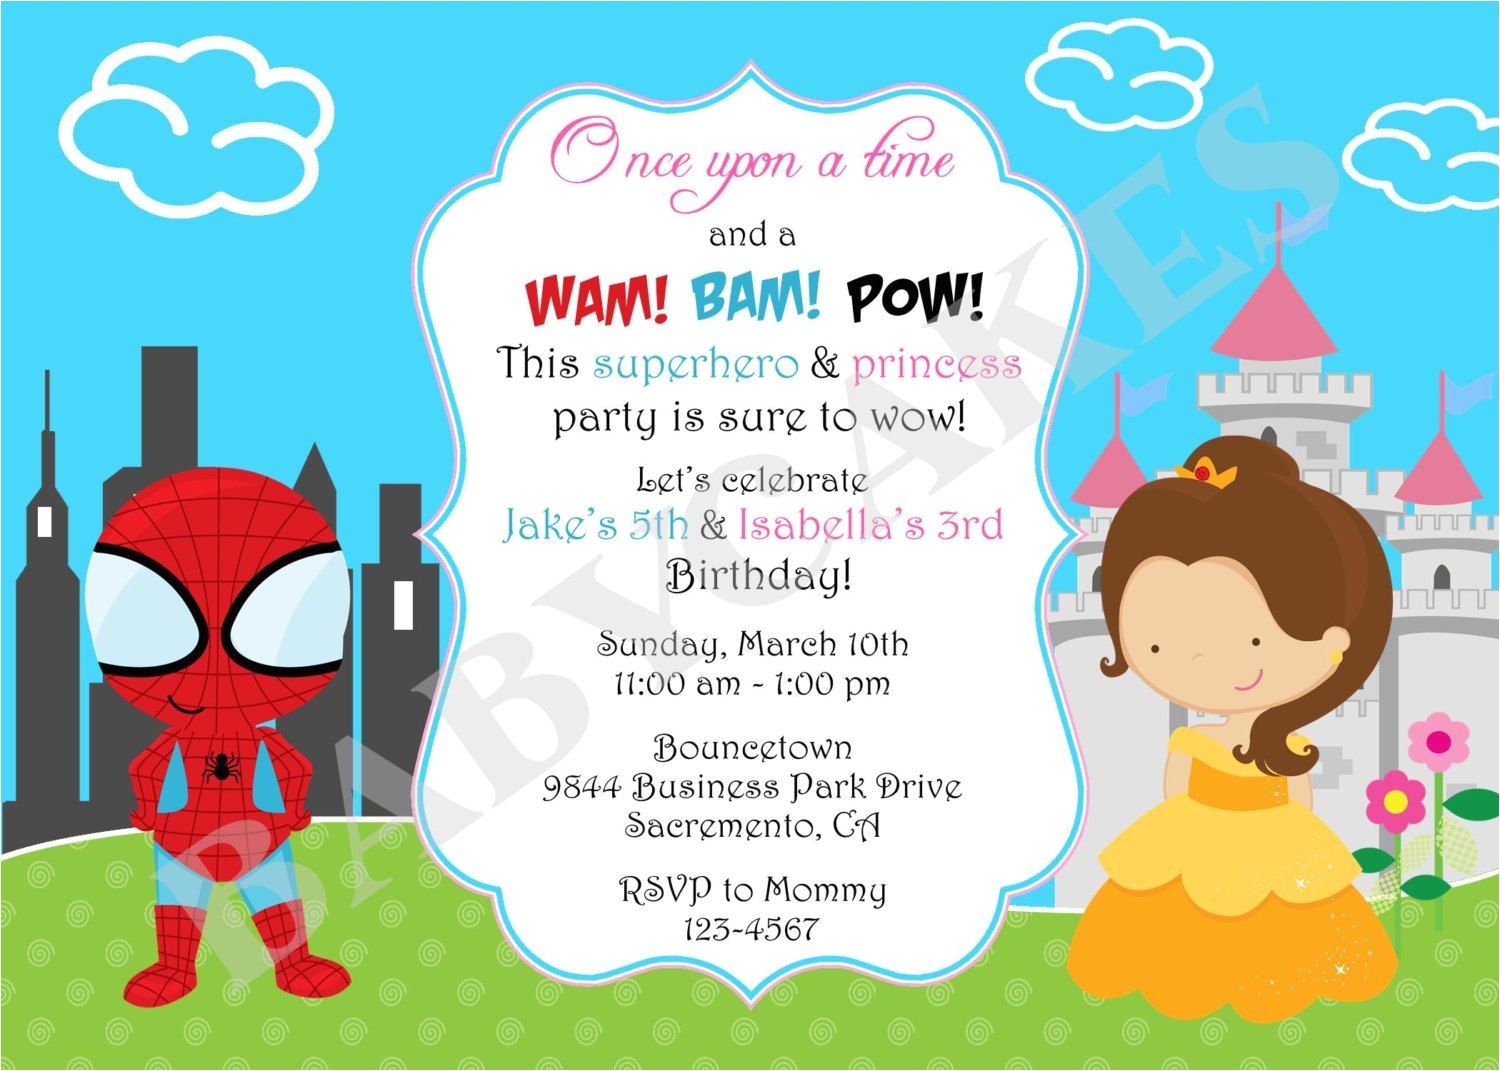 Princess and Superhero Party Invitation Template Superhero Princess Birthday Invitation Invite Sibling